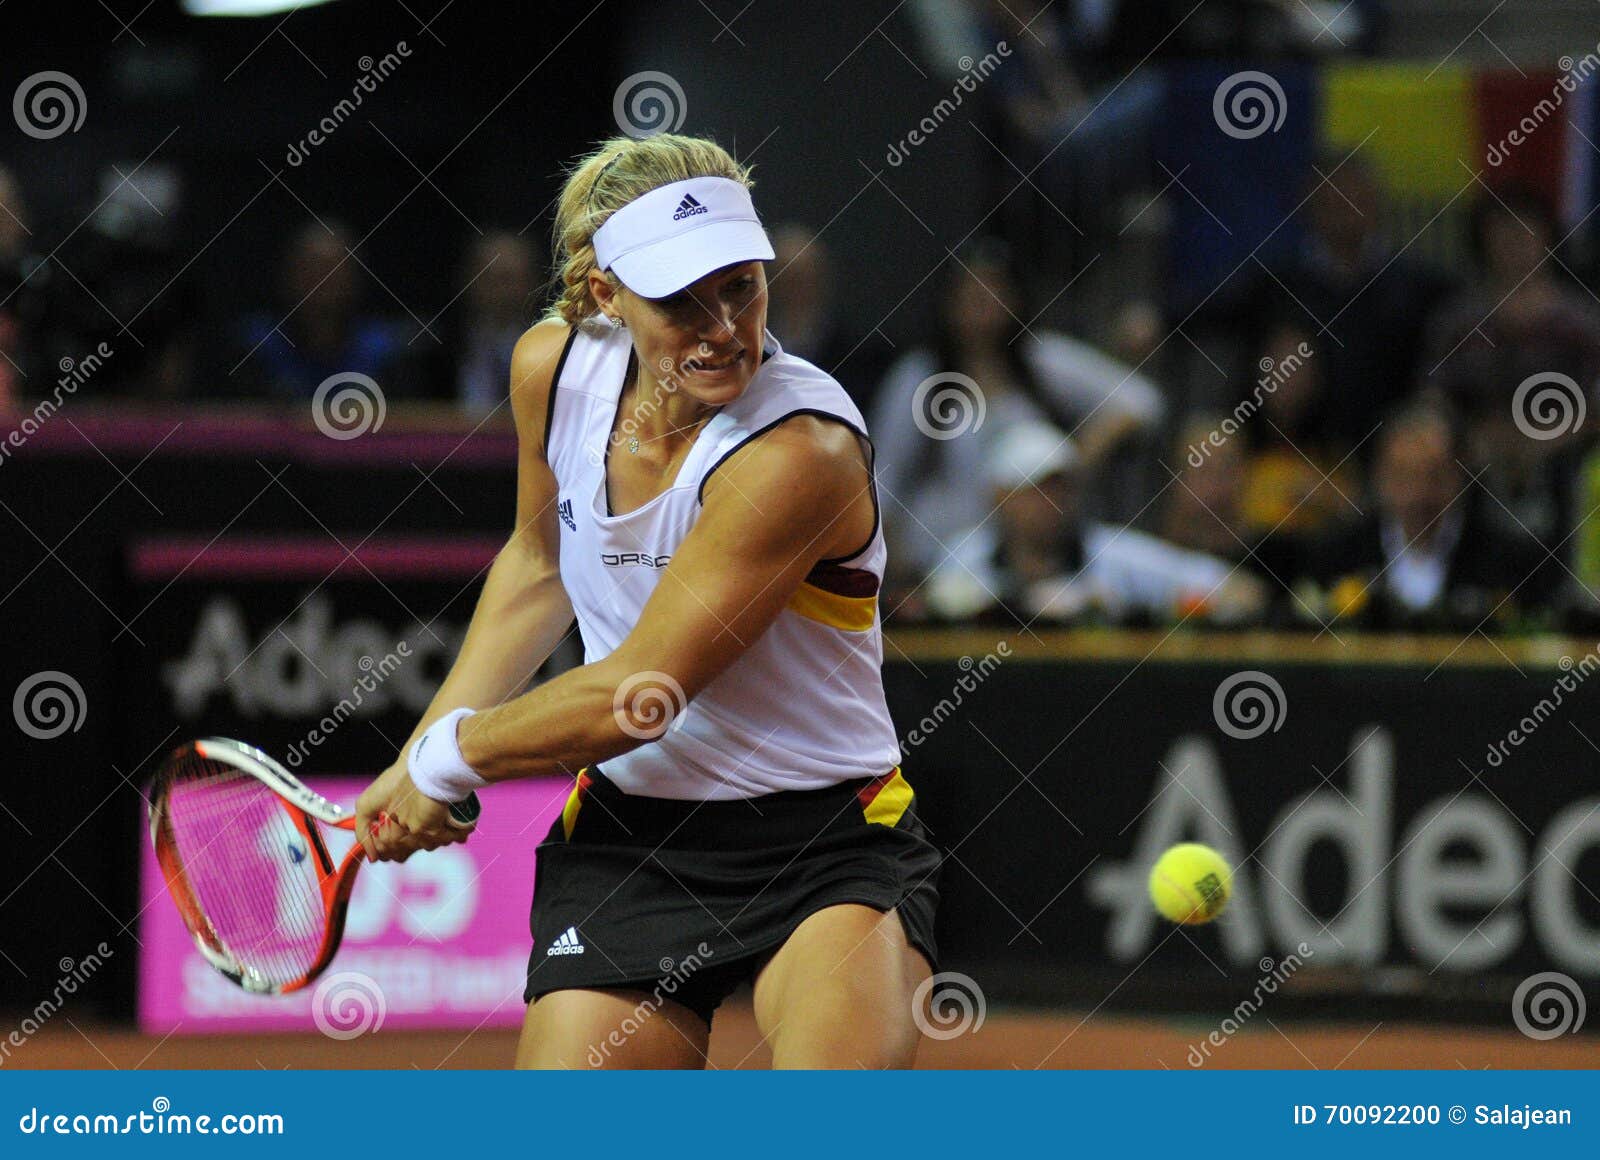 Tennis Women WTA 3 Ranked German Player Angelique Kerber Editorial Image